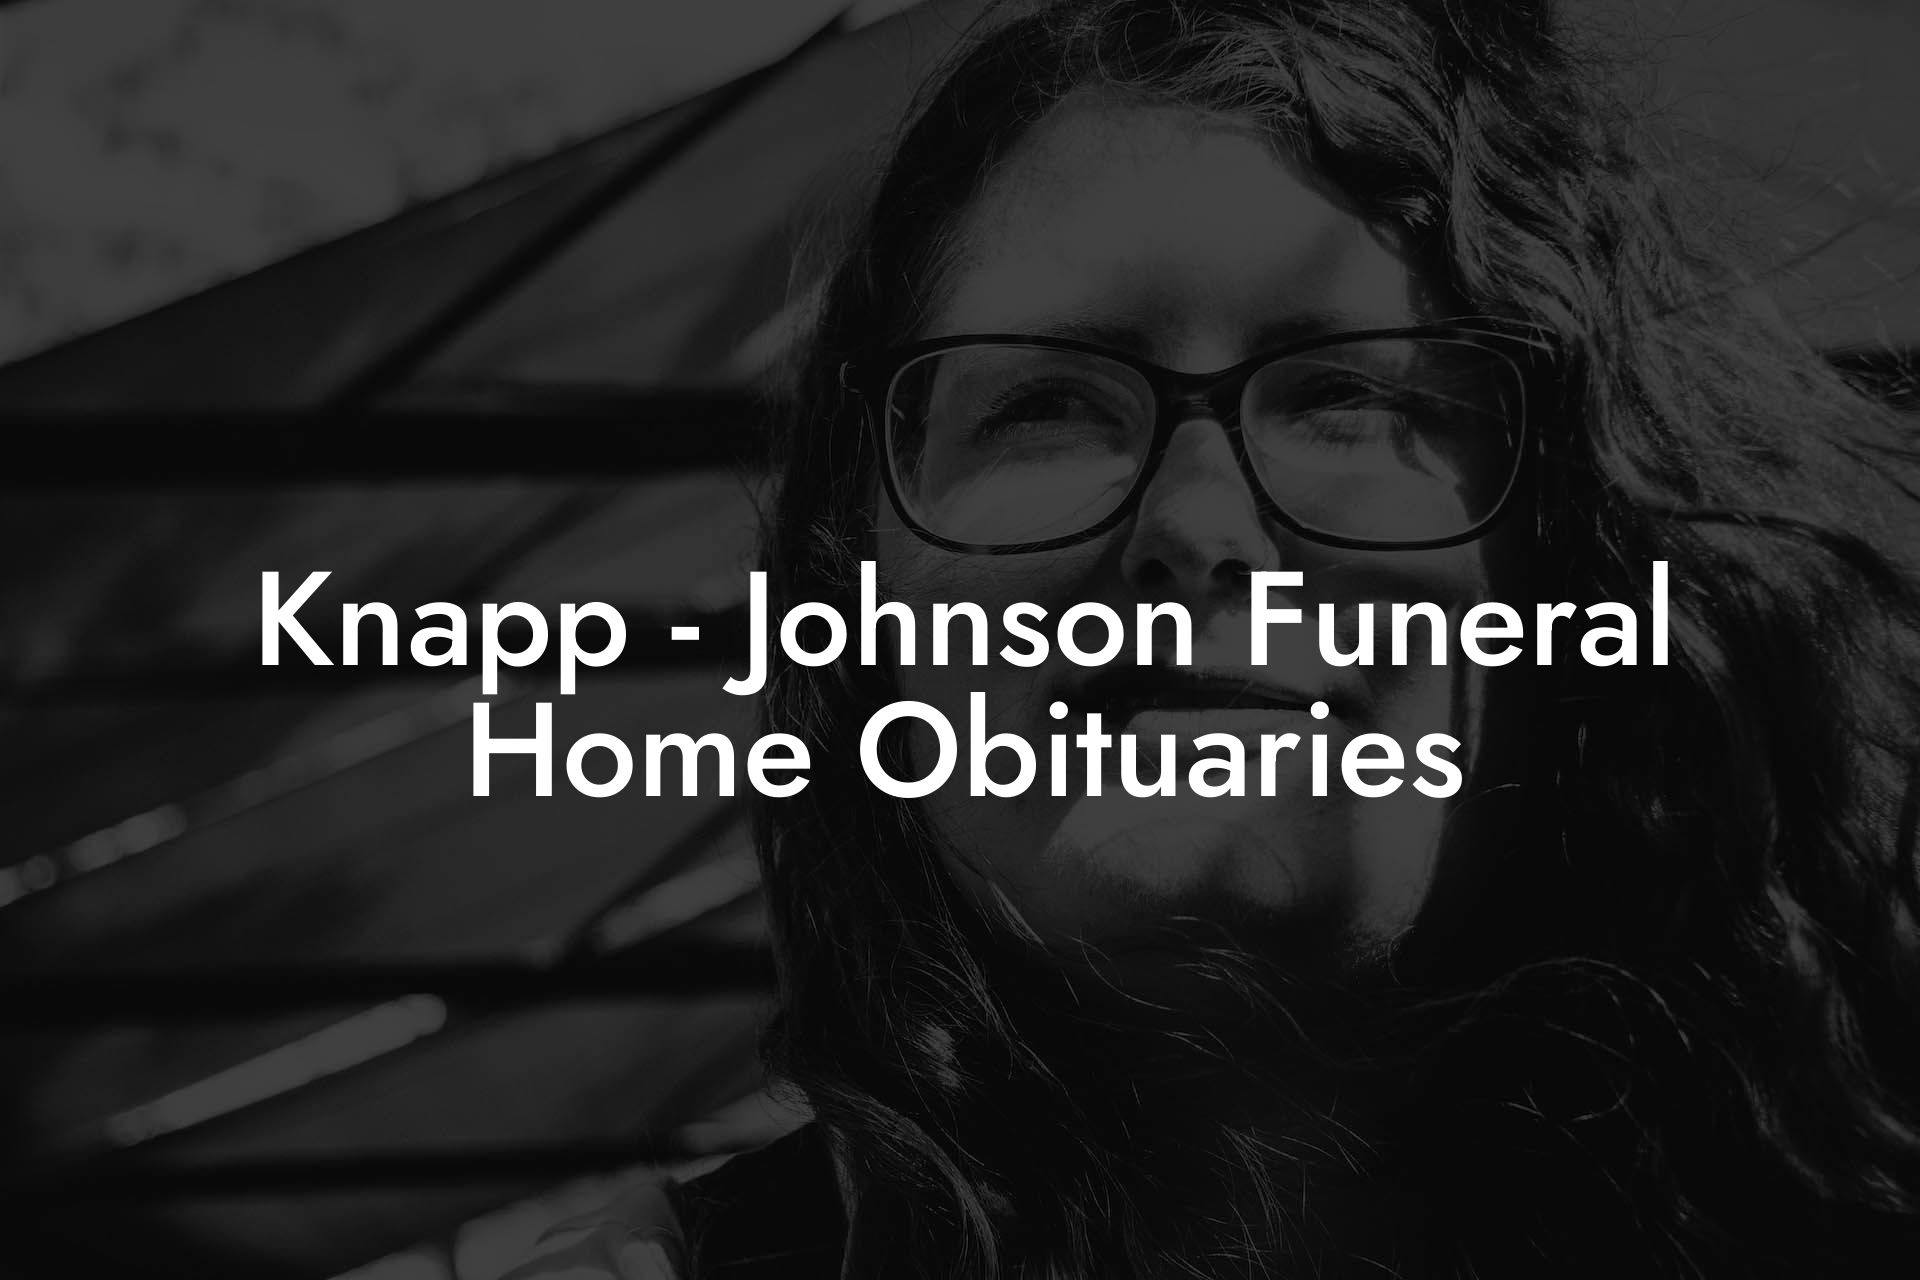 Knapp - Johnson Funeral Home Obituaries